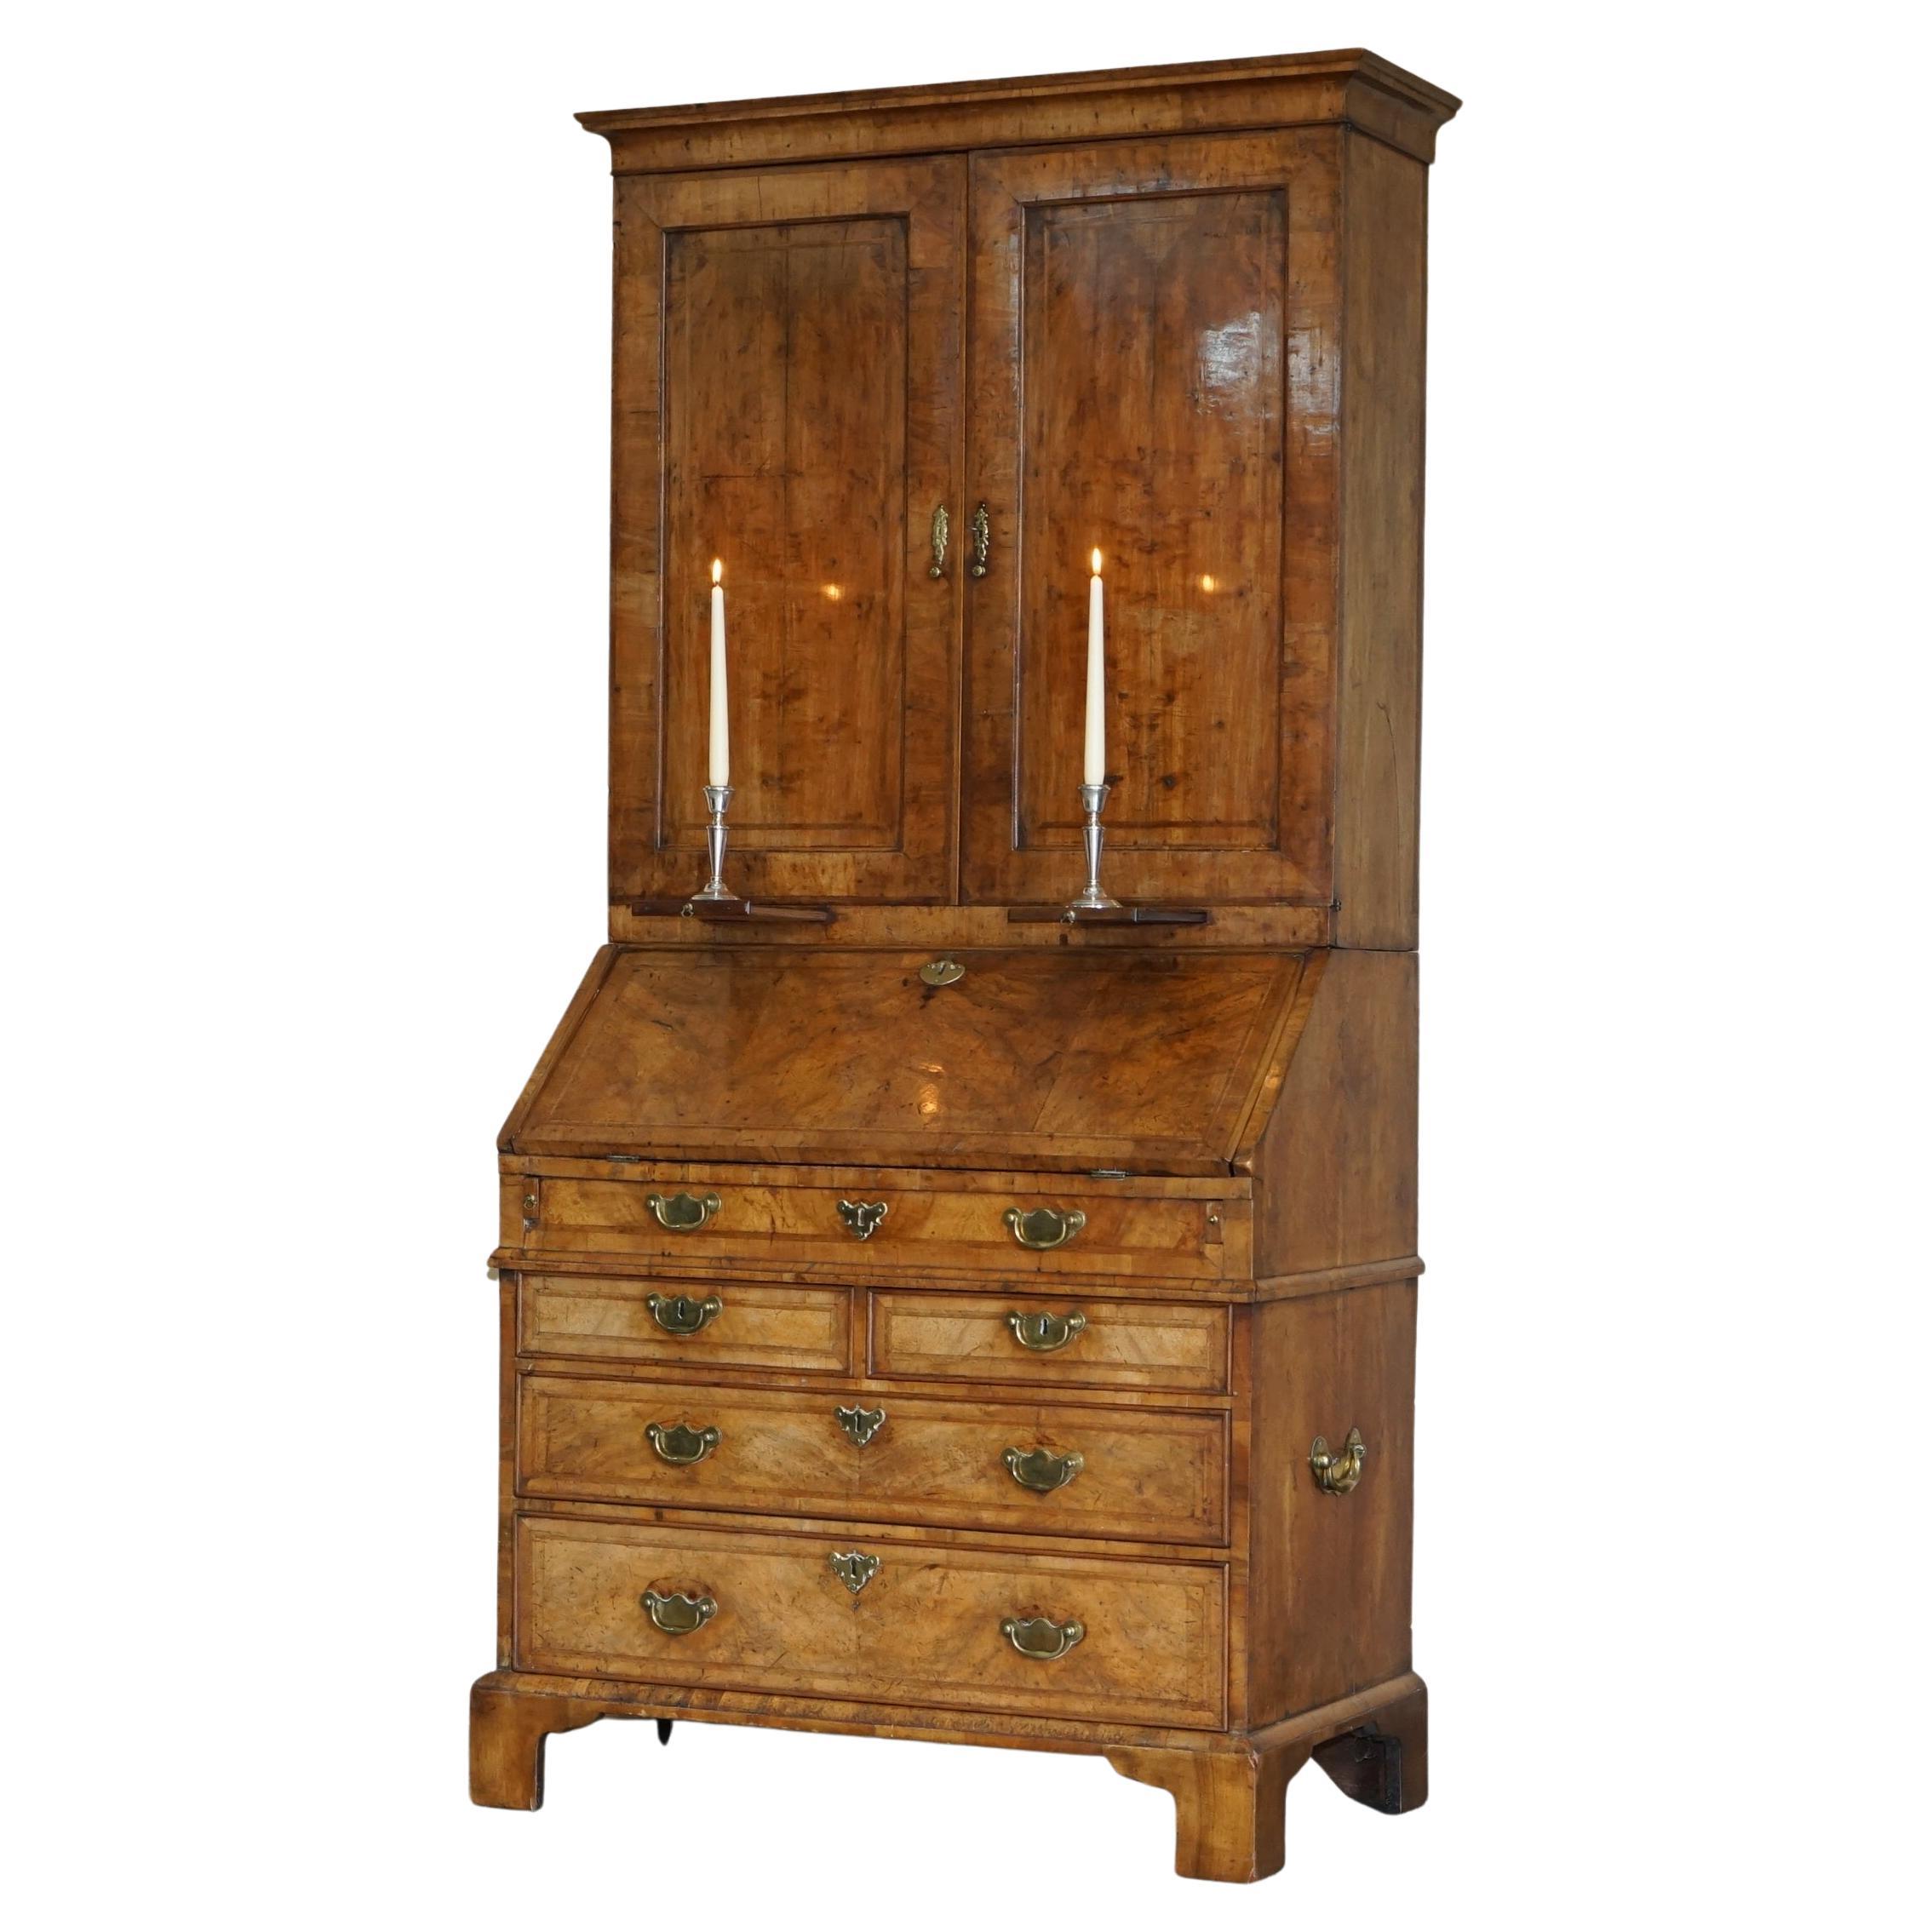 Fine Antique George II Circa 1740 Burr Walnut Burear Bookcase Chest of Drawers For Sale